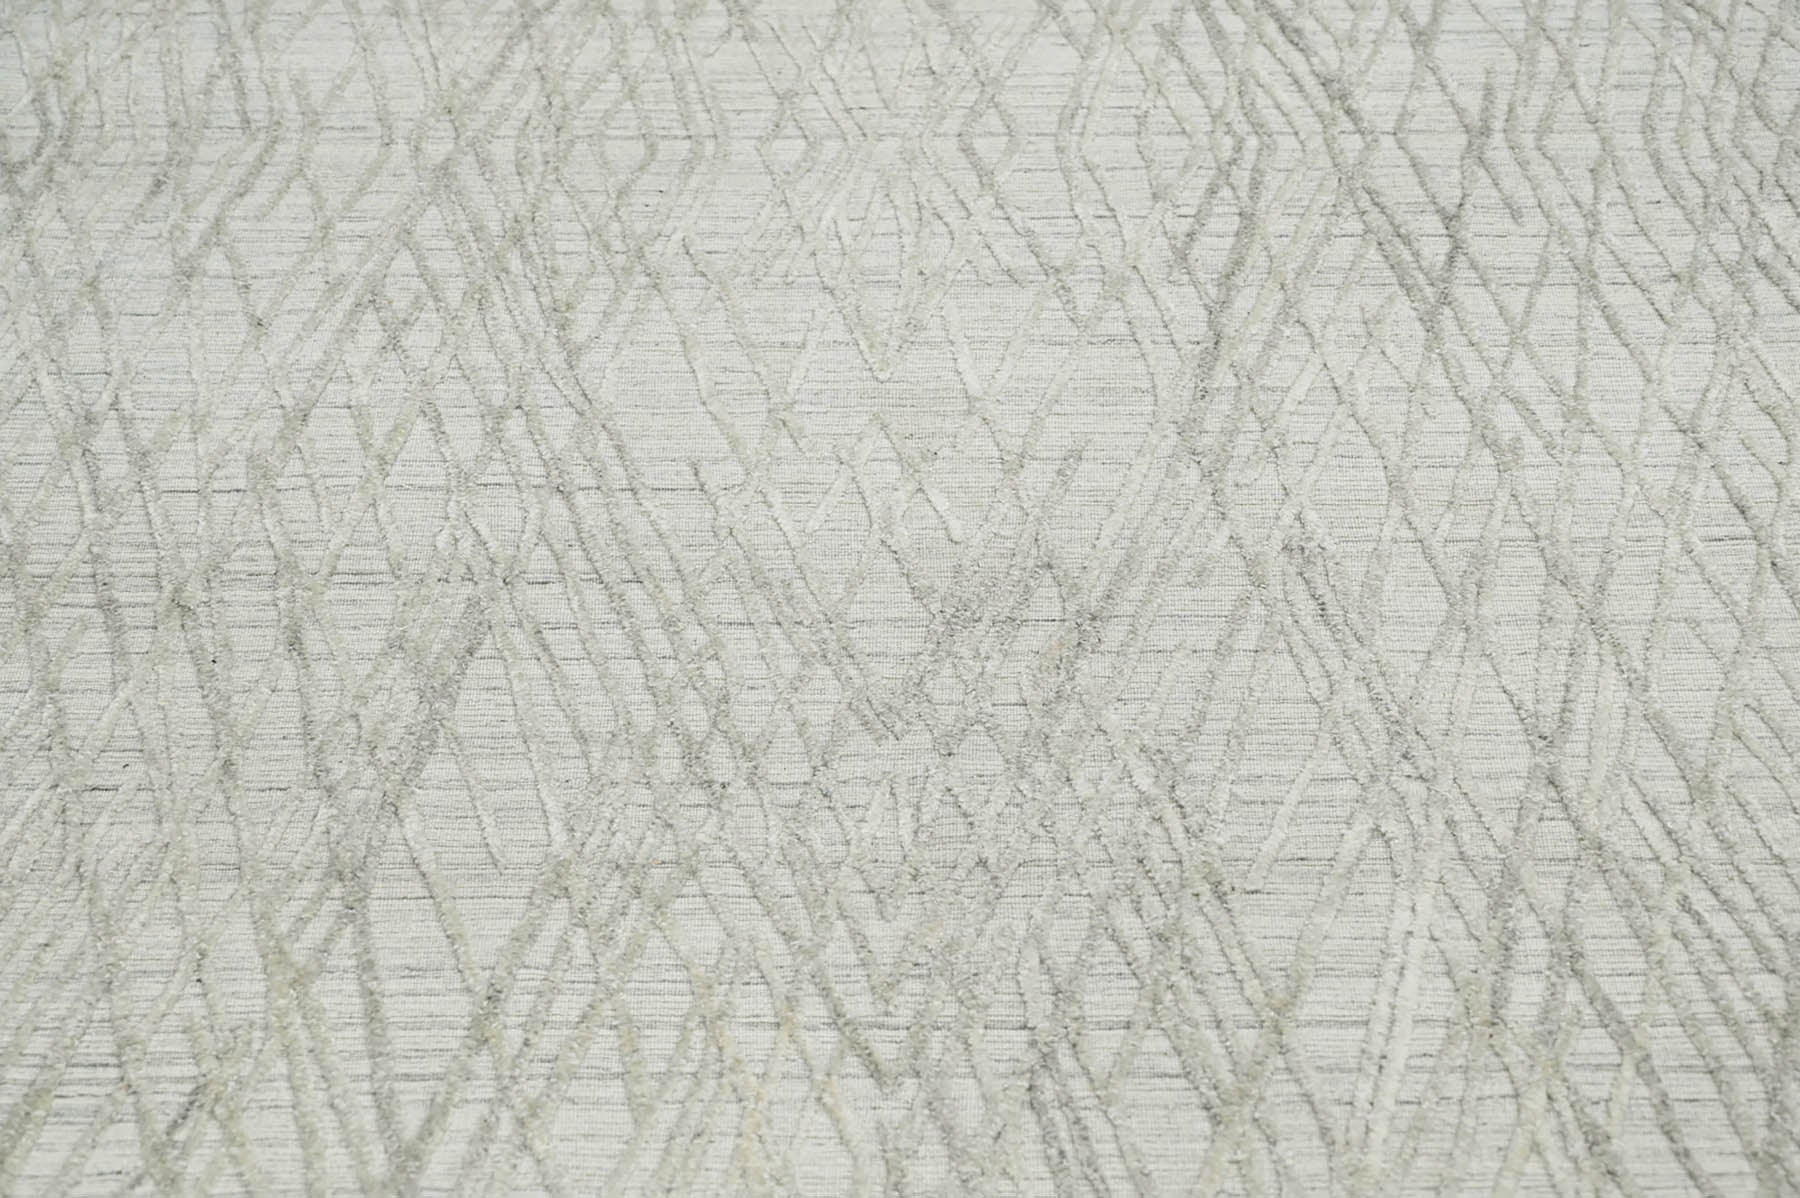 Koksal 4x6 Tone On Tone Gray LoomBloom Hand Knotted Modern & Contemporary Textured Tibetan 100% Wool Oriental Area Rug